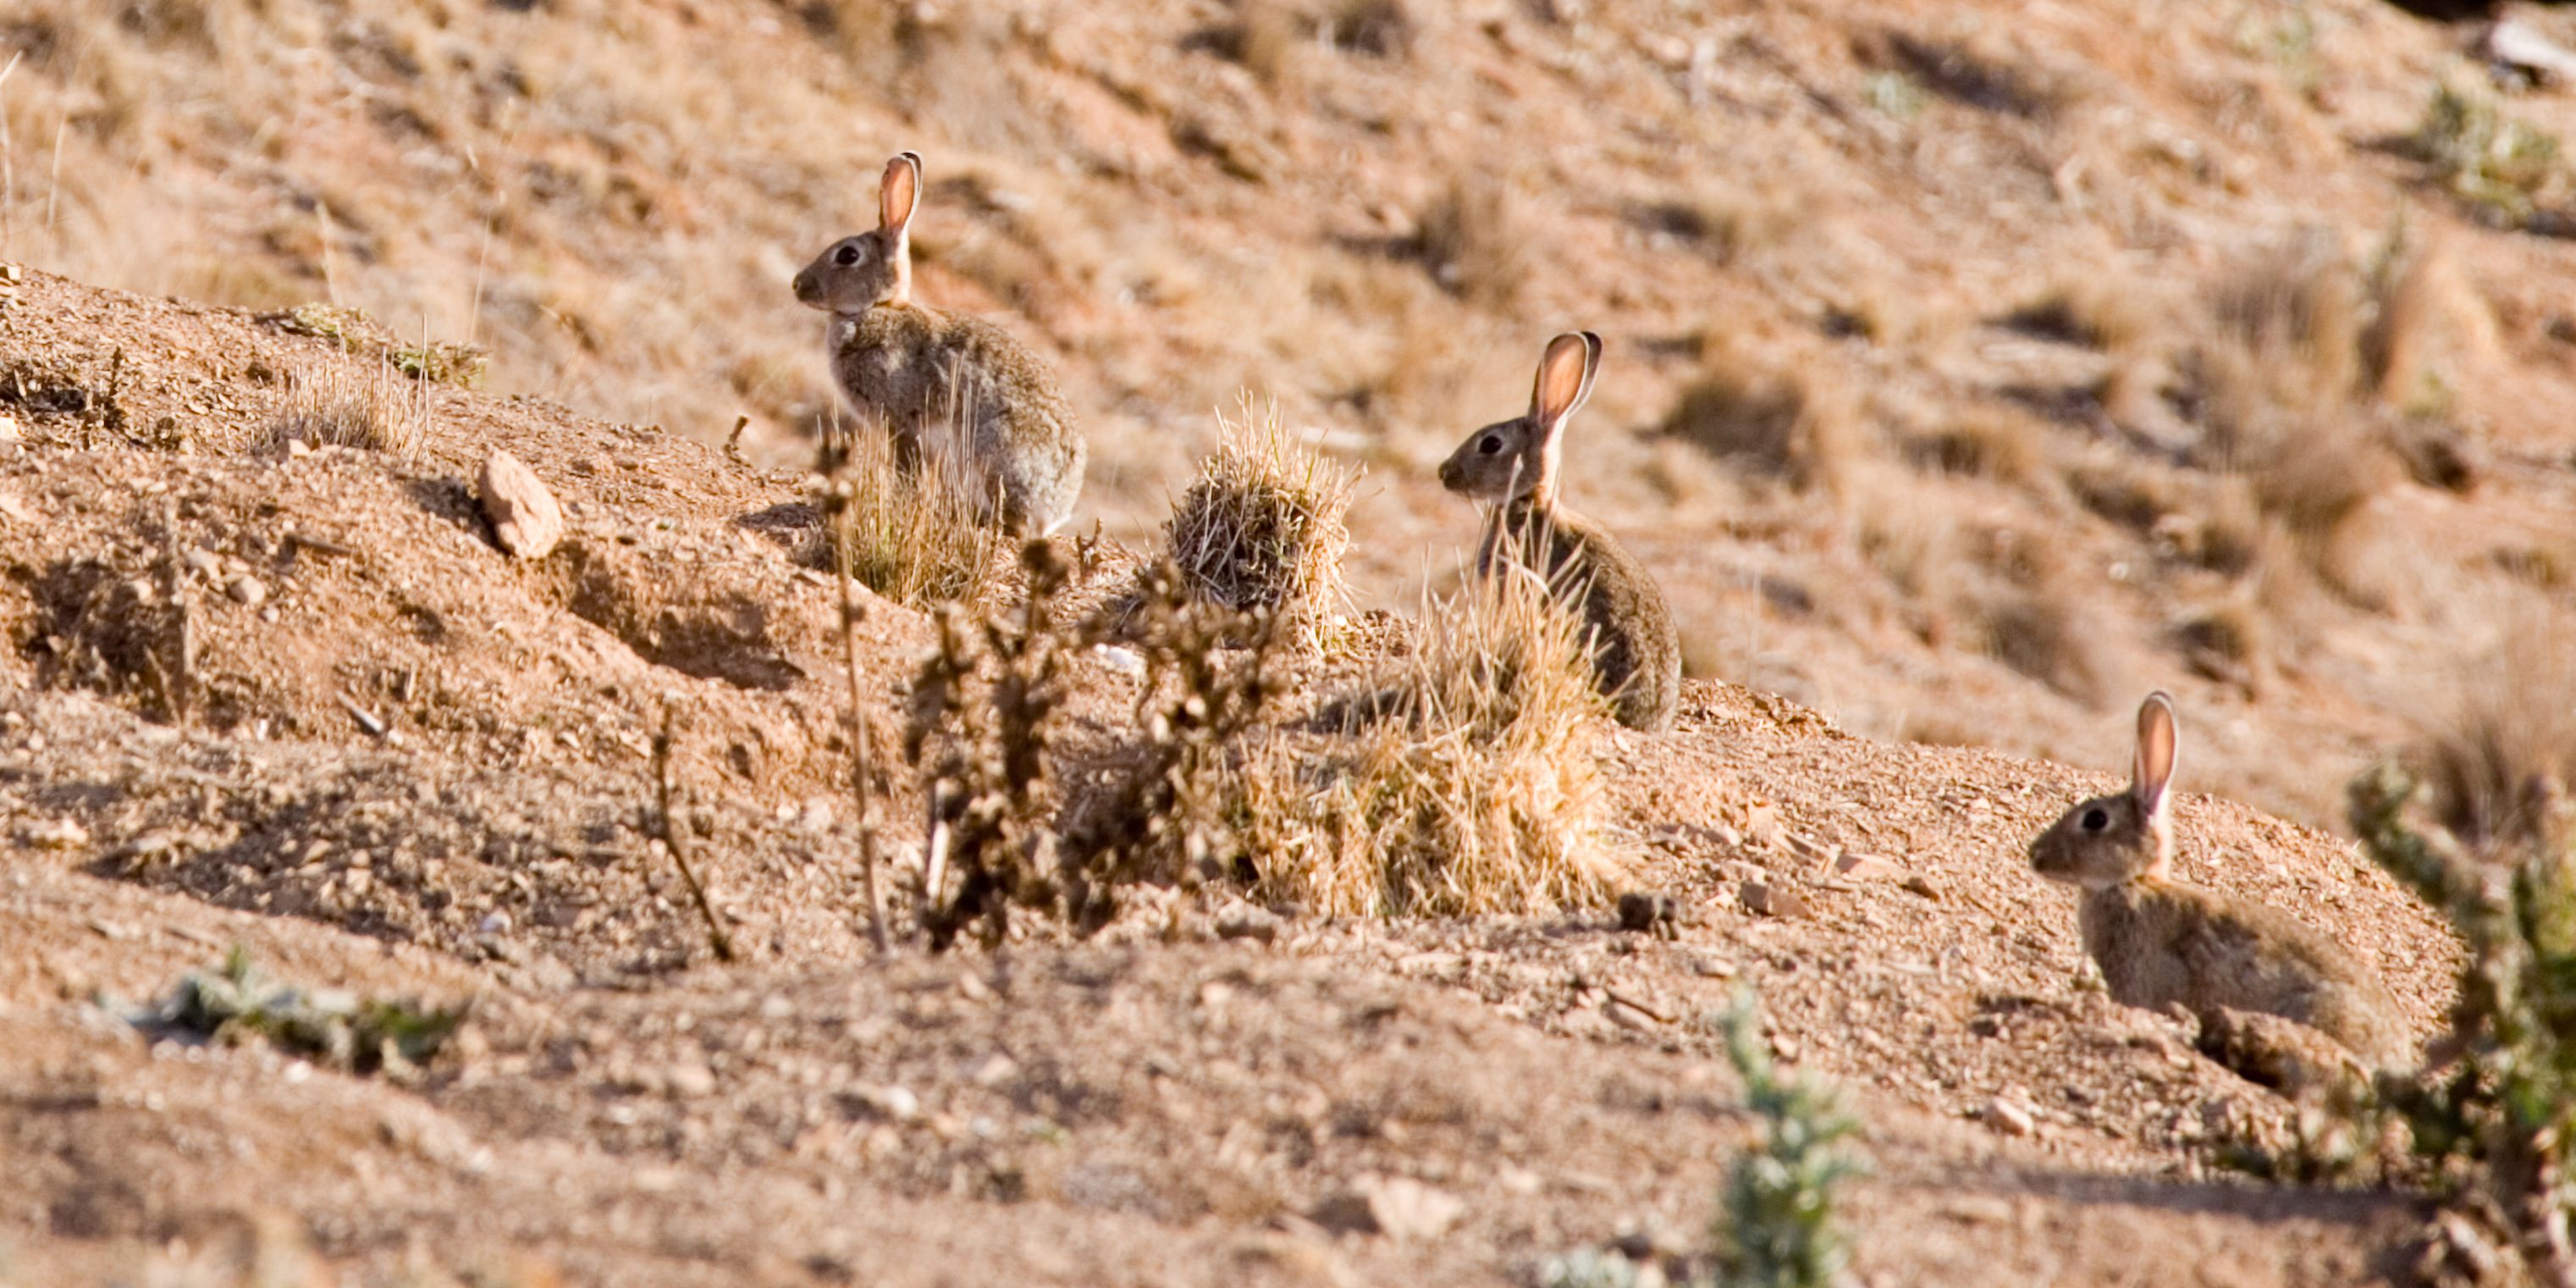 Wild rabbits in a dry Australian landscape. Photo: John Schilling via Flikr